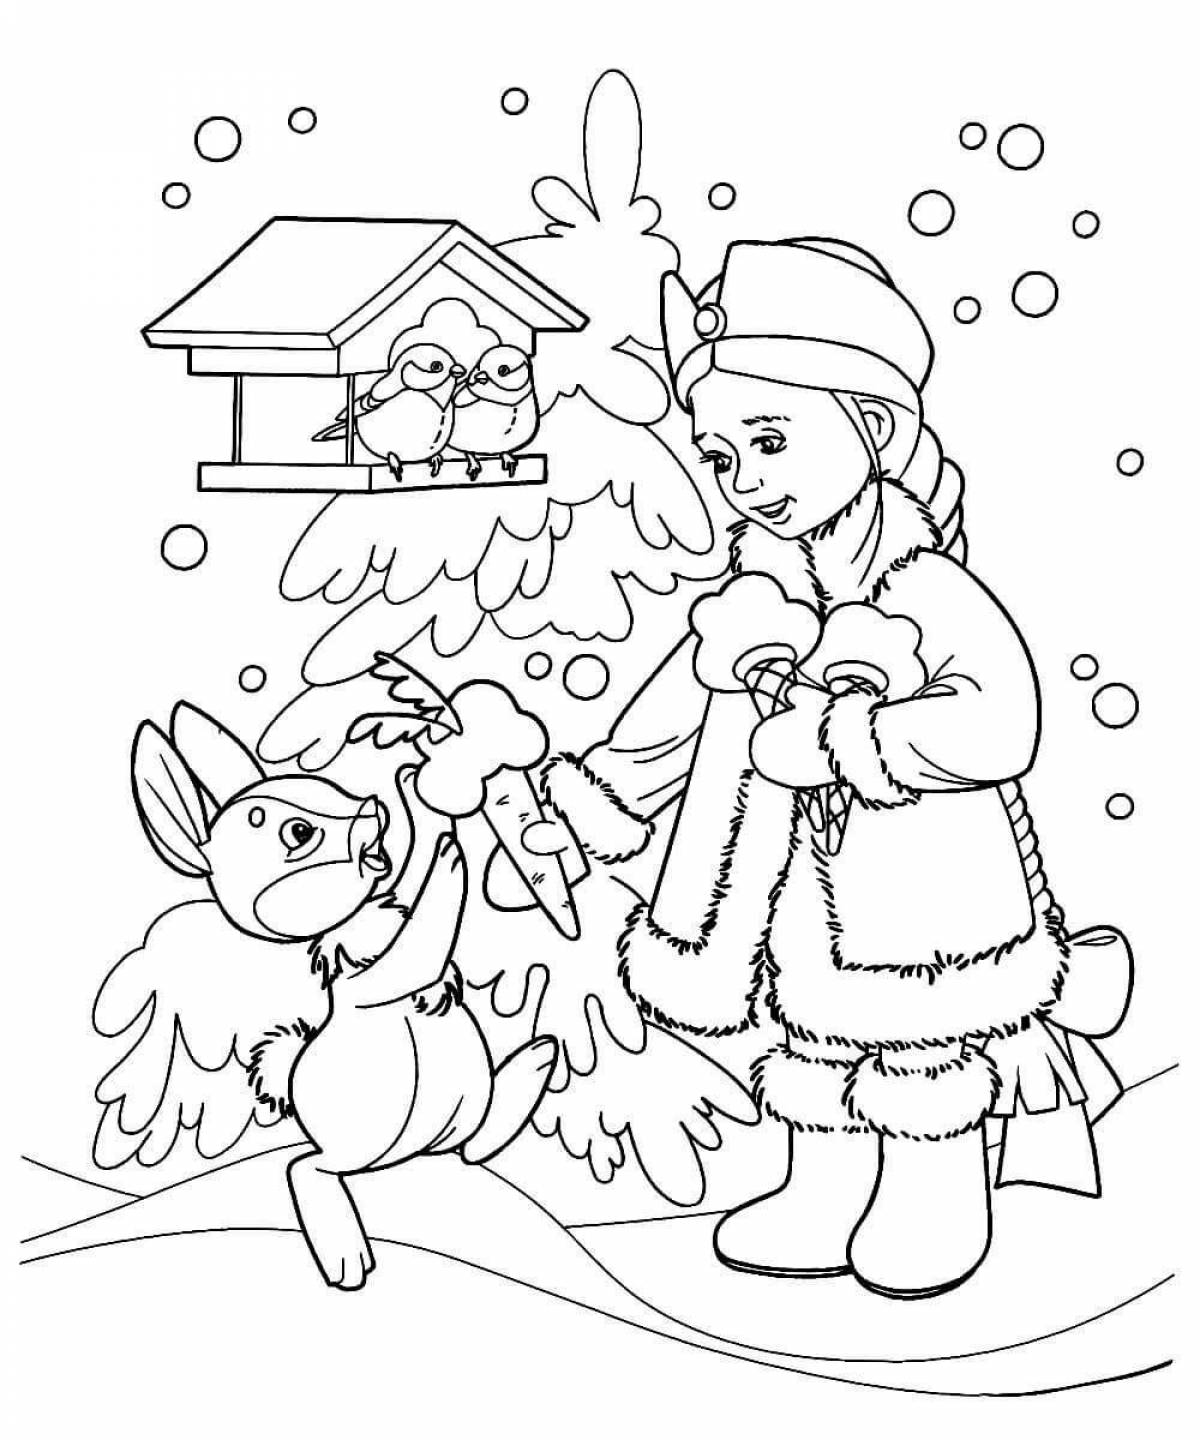 Cute december coloring book for kids